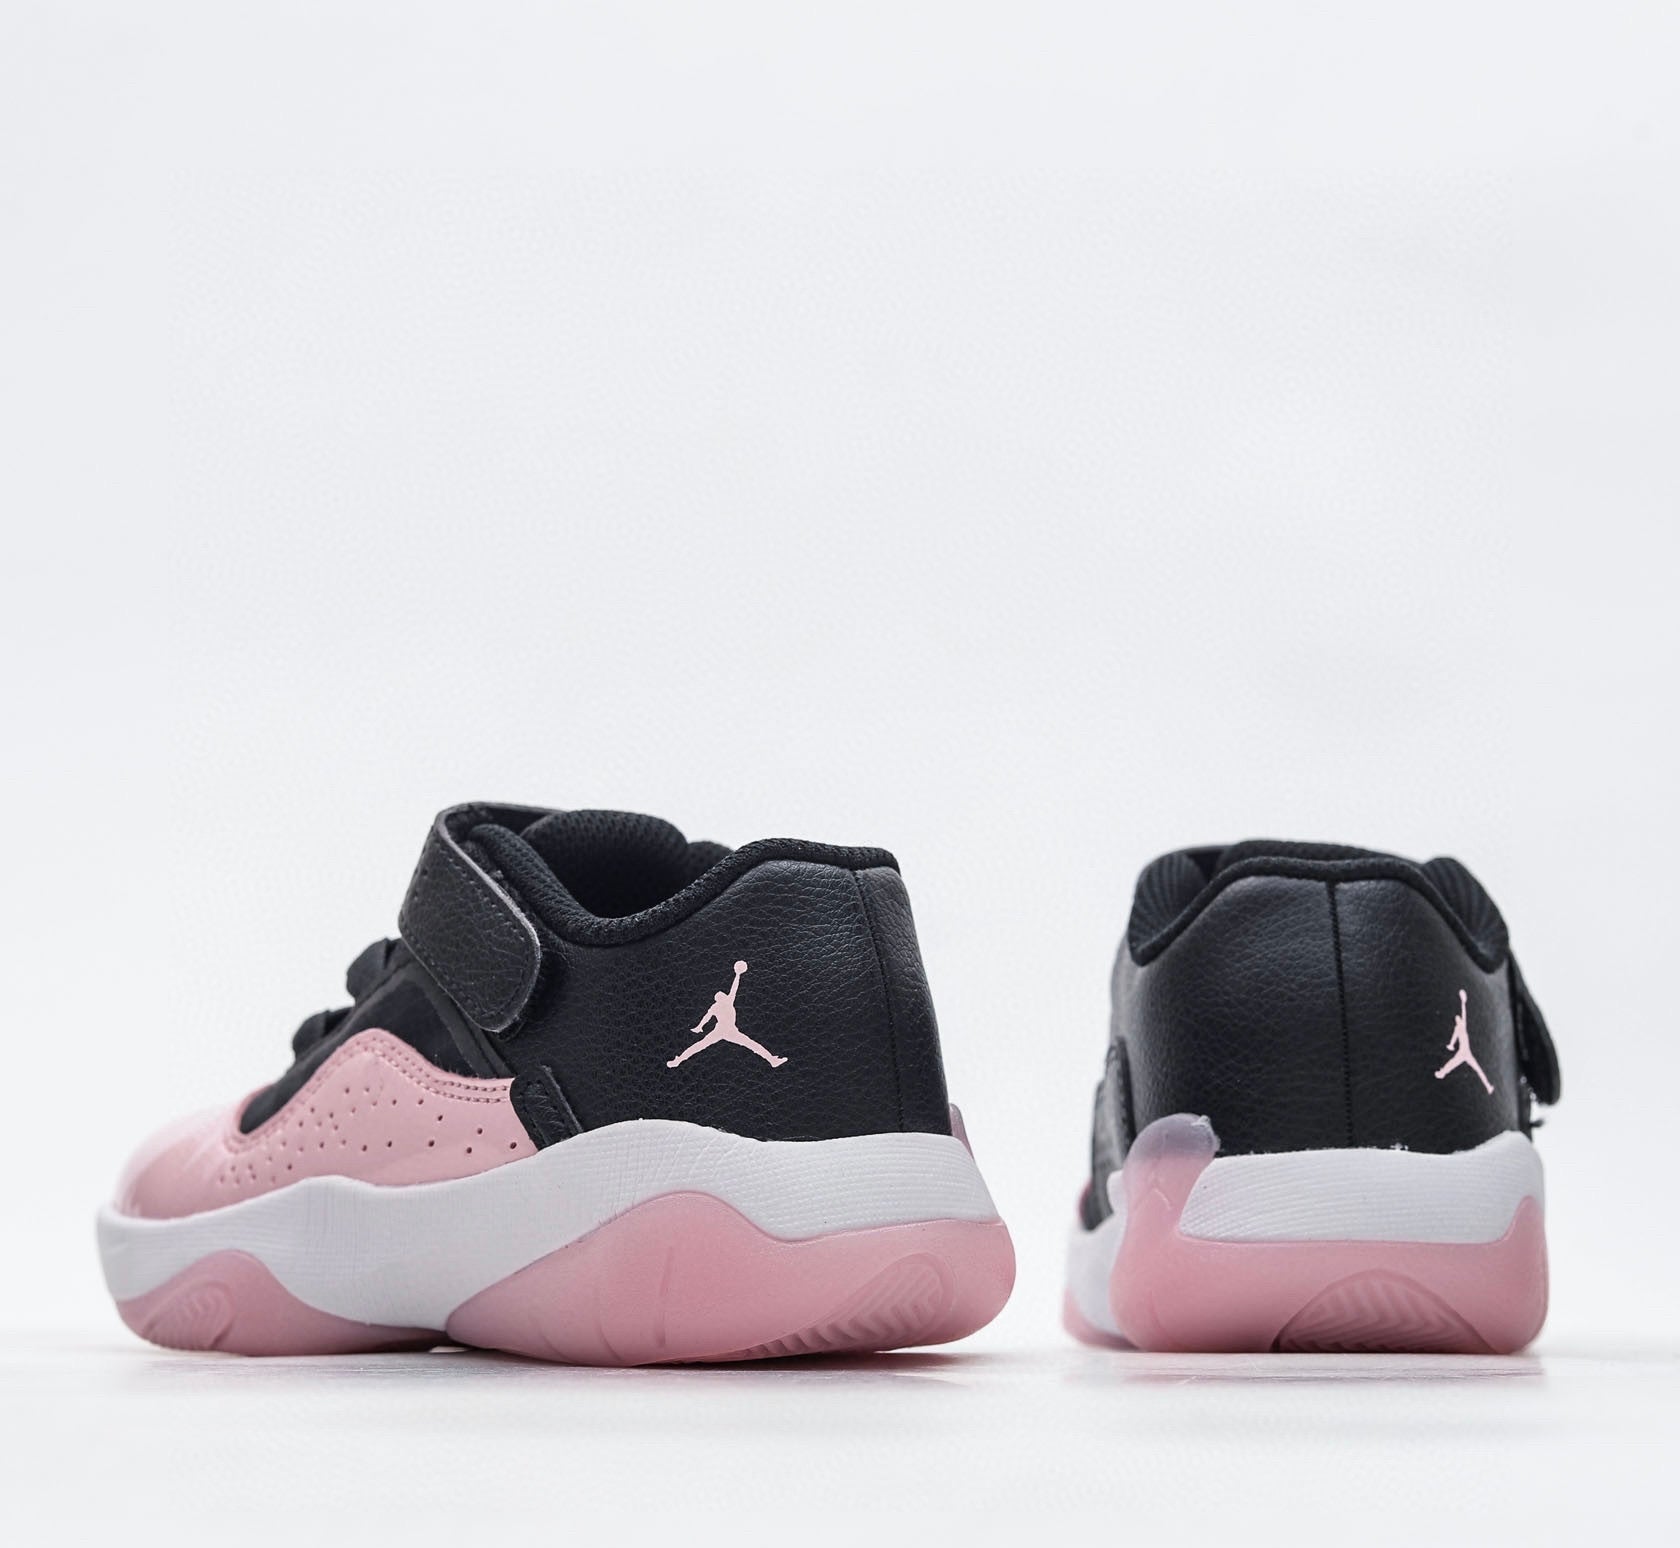 Nike air jordan retro low cut chaussures noires et roses